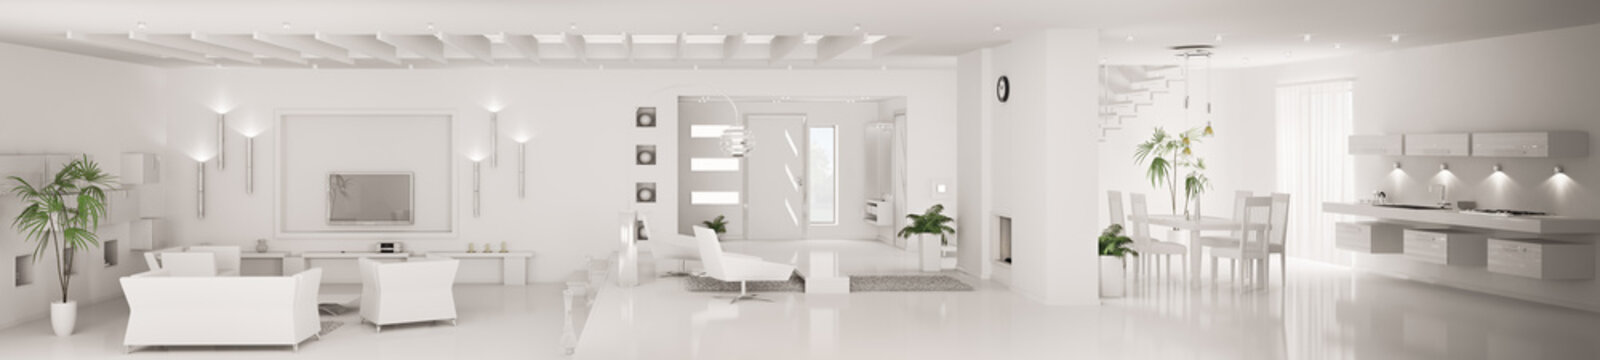 Weiss interior apartment panorama 3d render